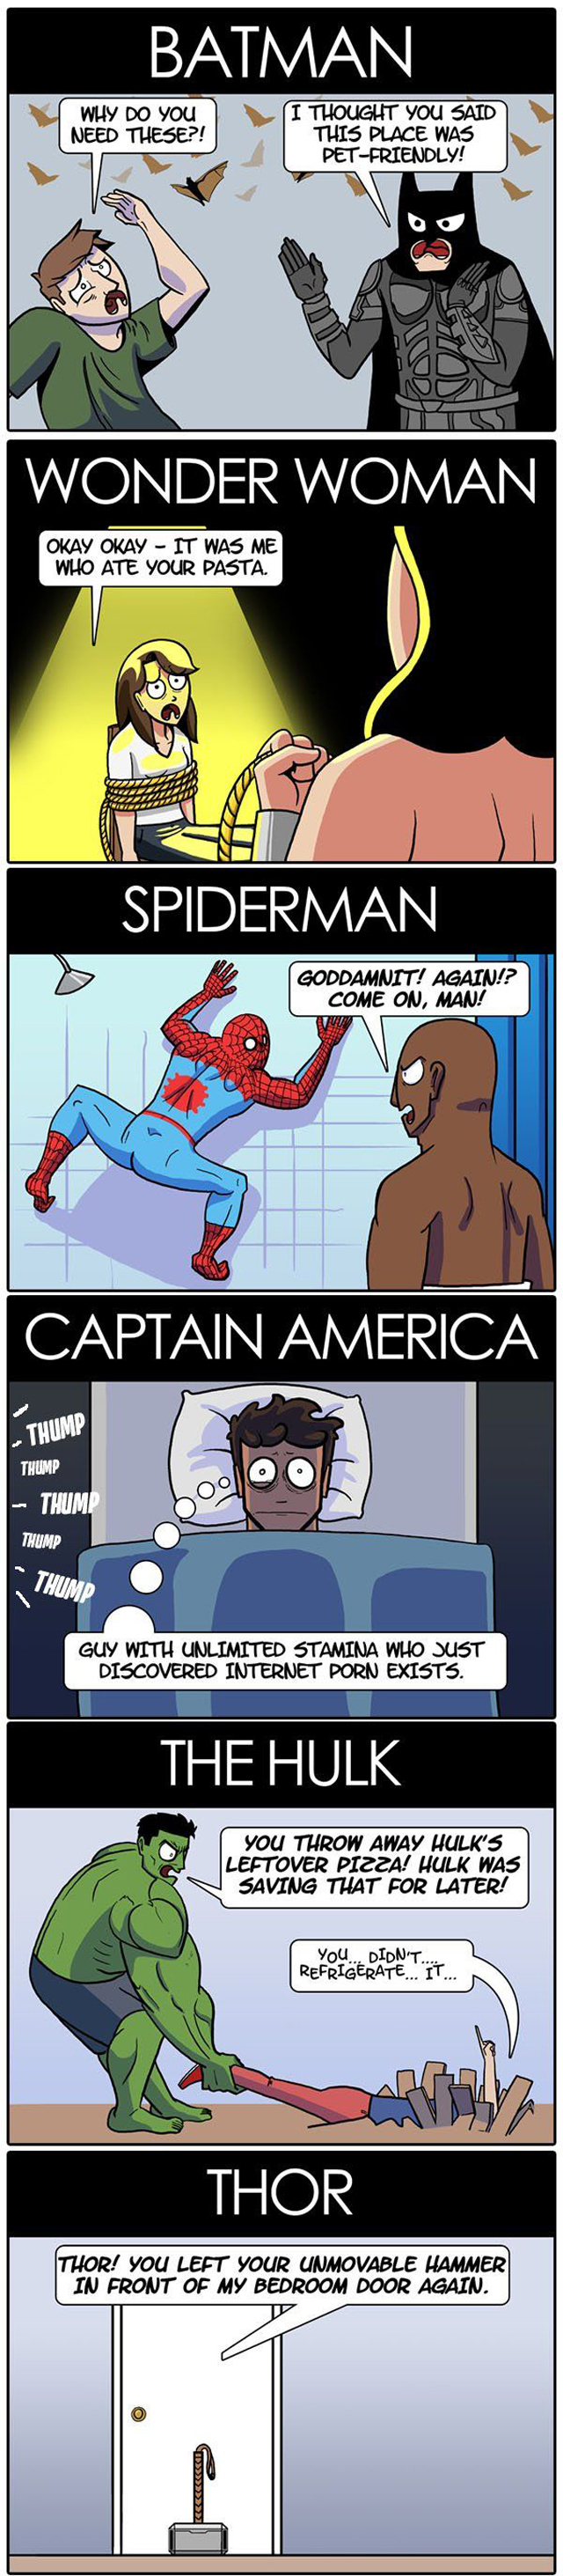 Funny superhero roommates cartoon